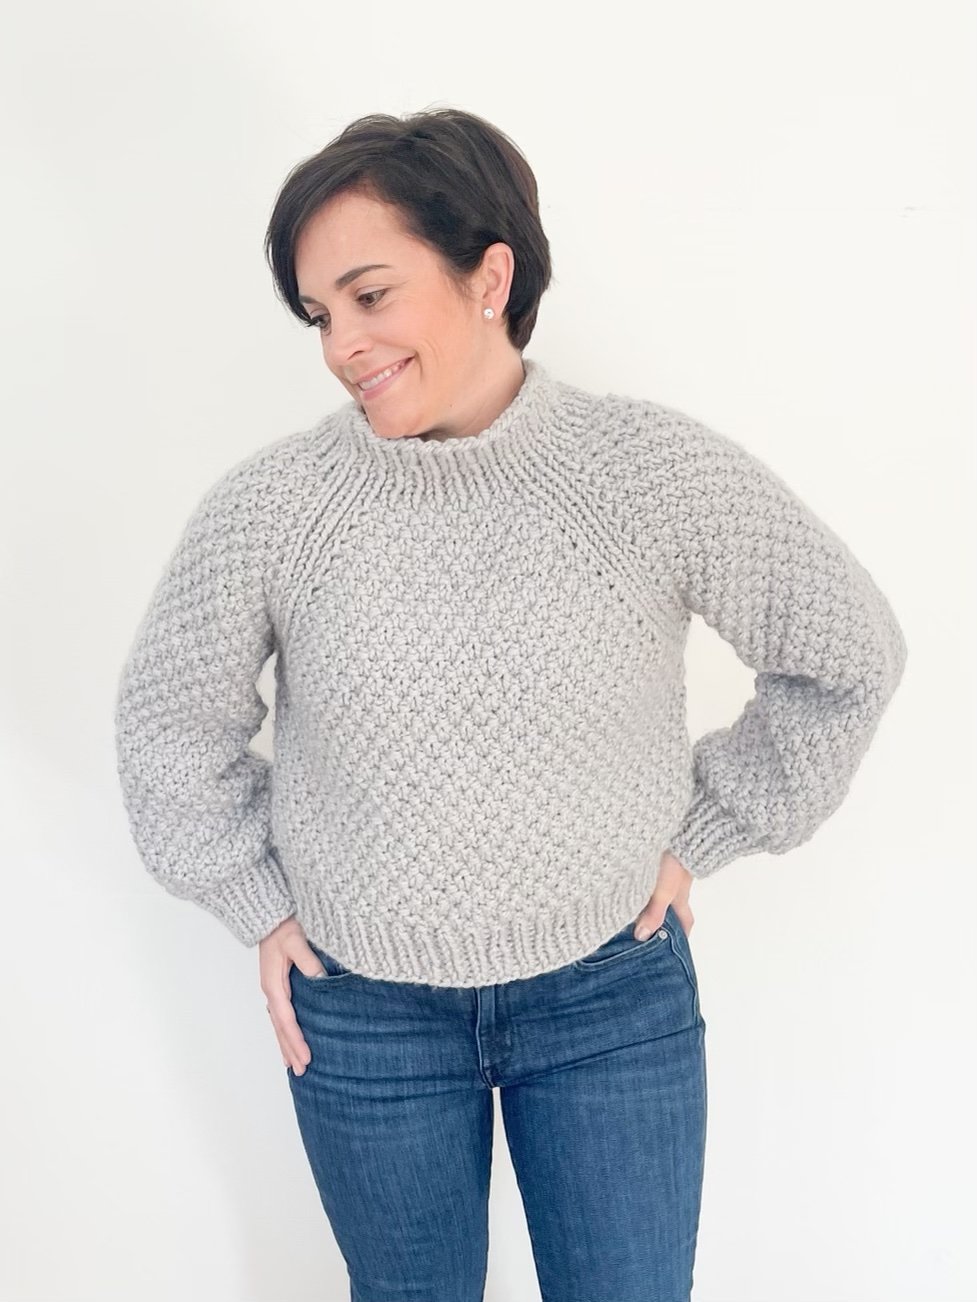 Easy Moss Stitch Raglan Knit Sweater Free Pattern + Tutorial